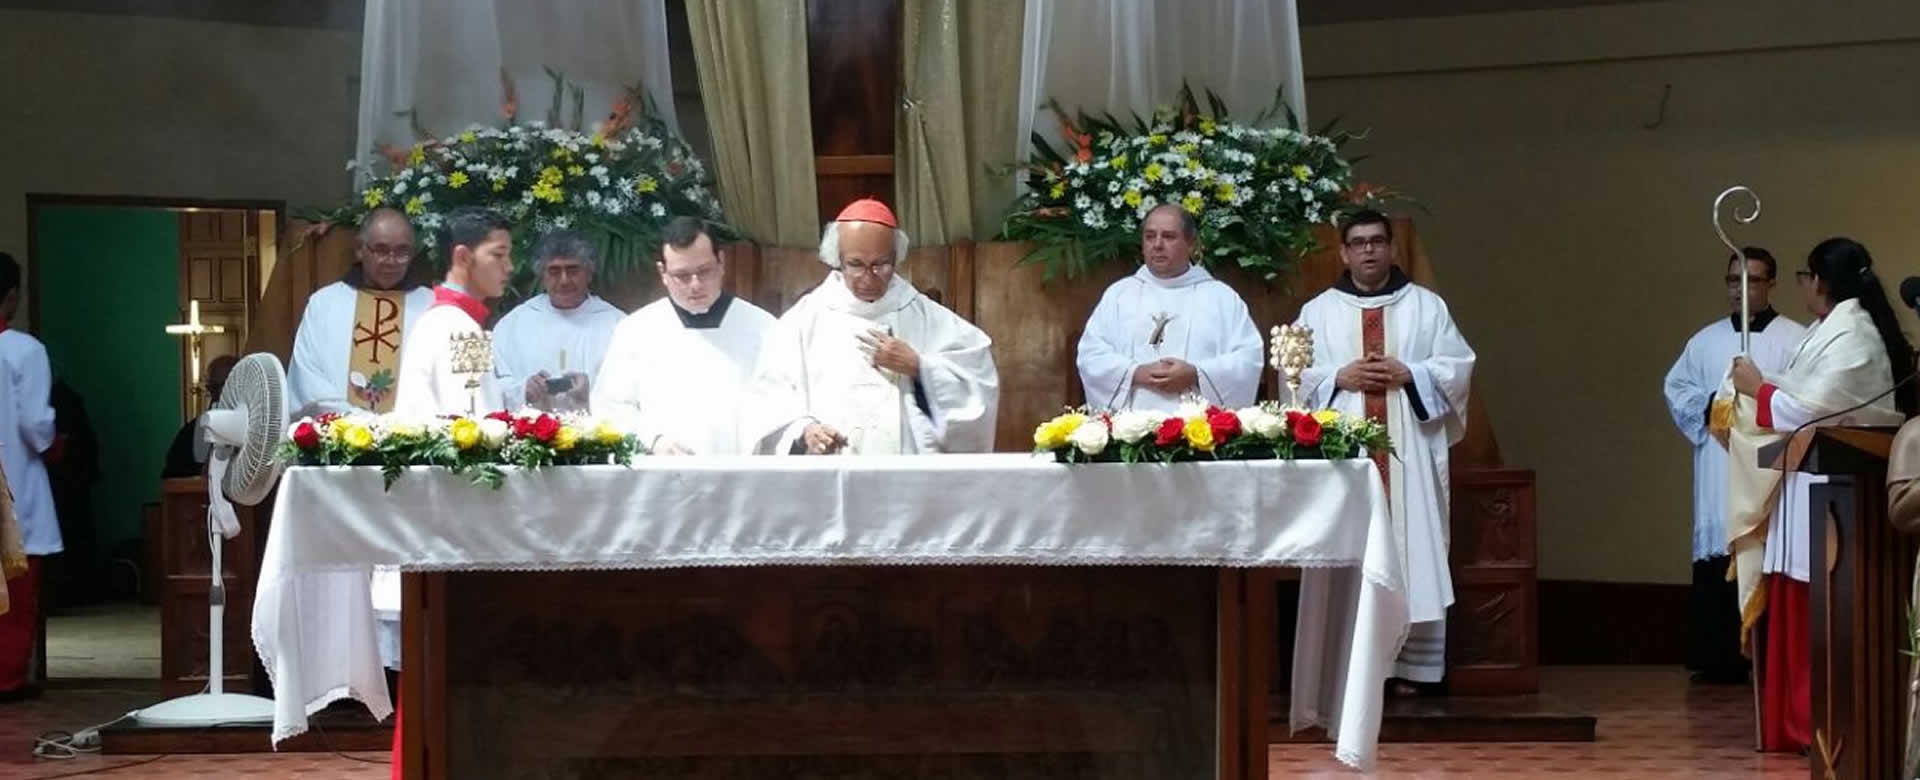 Cardenal Leopoldo Brenes nombra Sacerdote Franciscano a Fray Raul Urbina Rojas